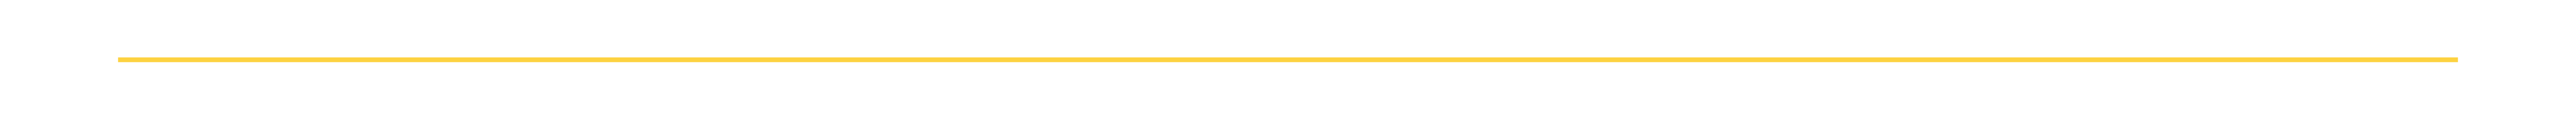 Yellow Divider Line